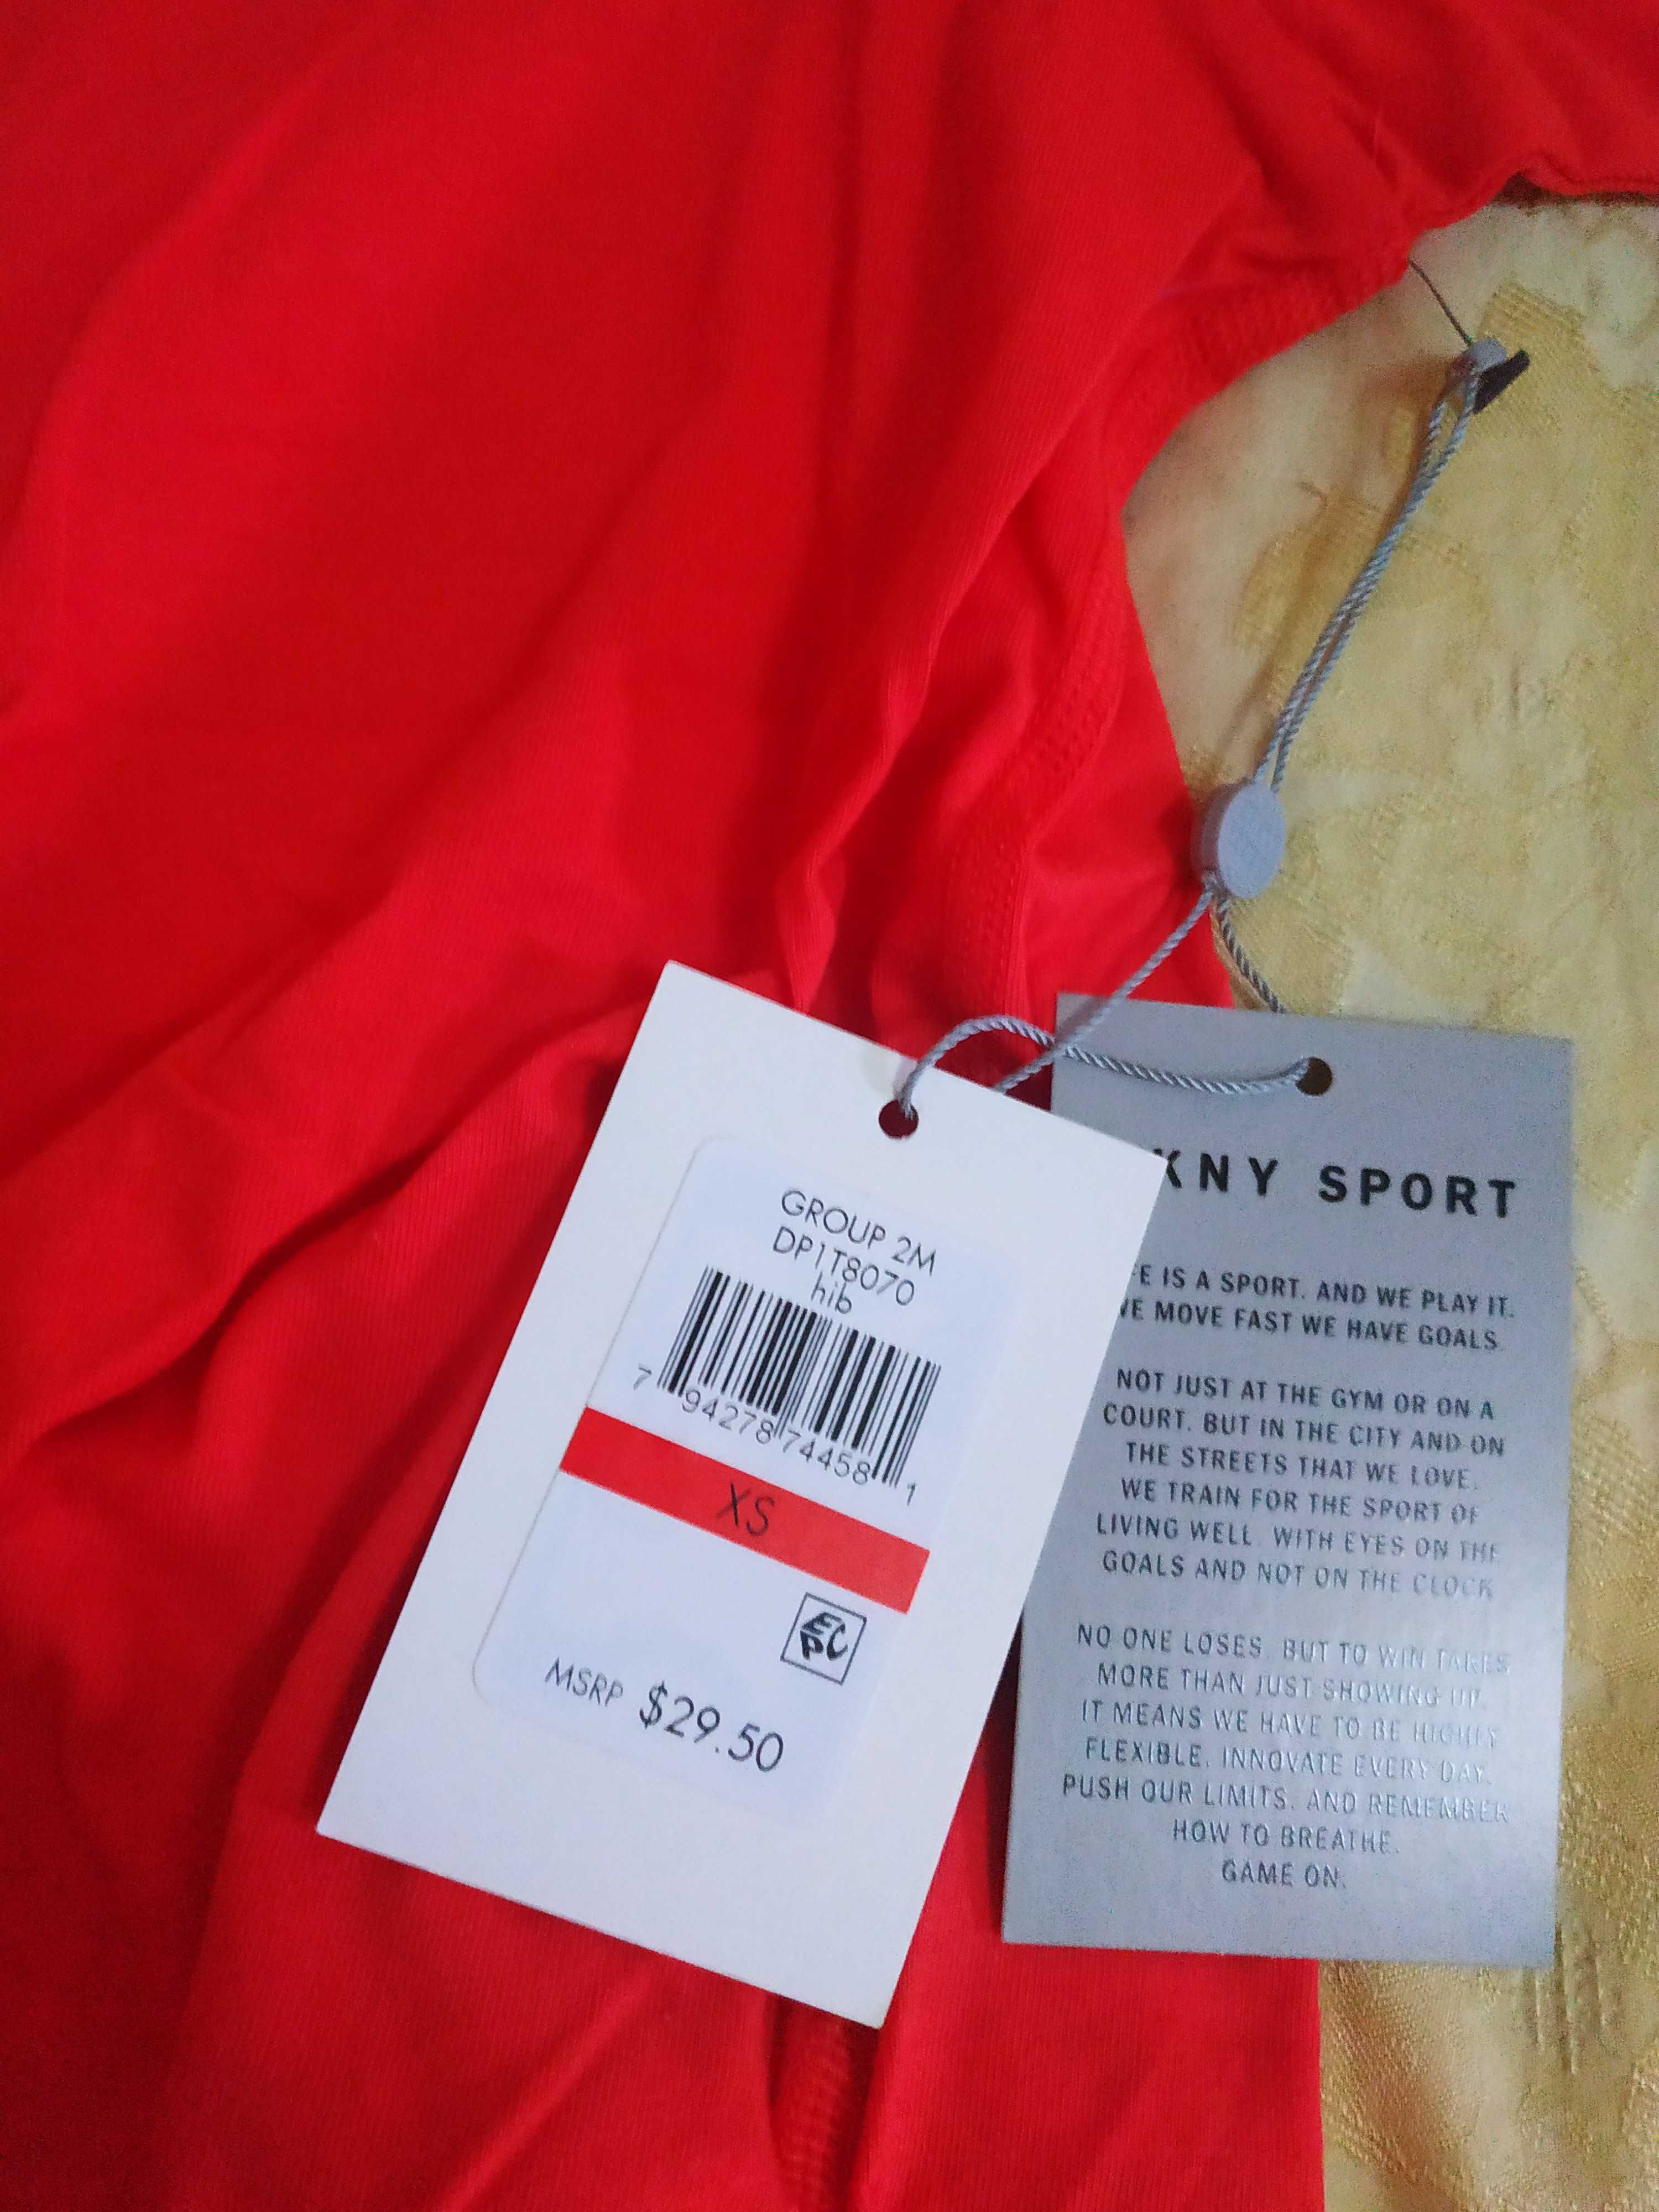 Костюм яркий брендовый для занятия спортом-лосины+футболка DKNY